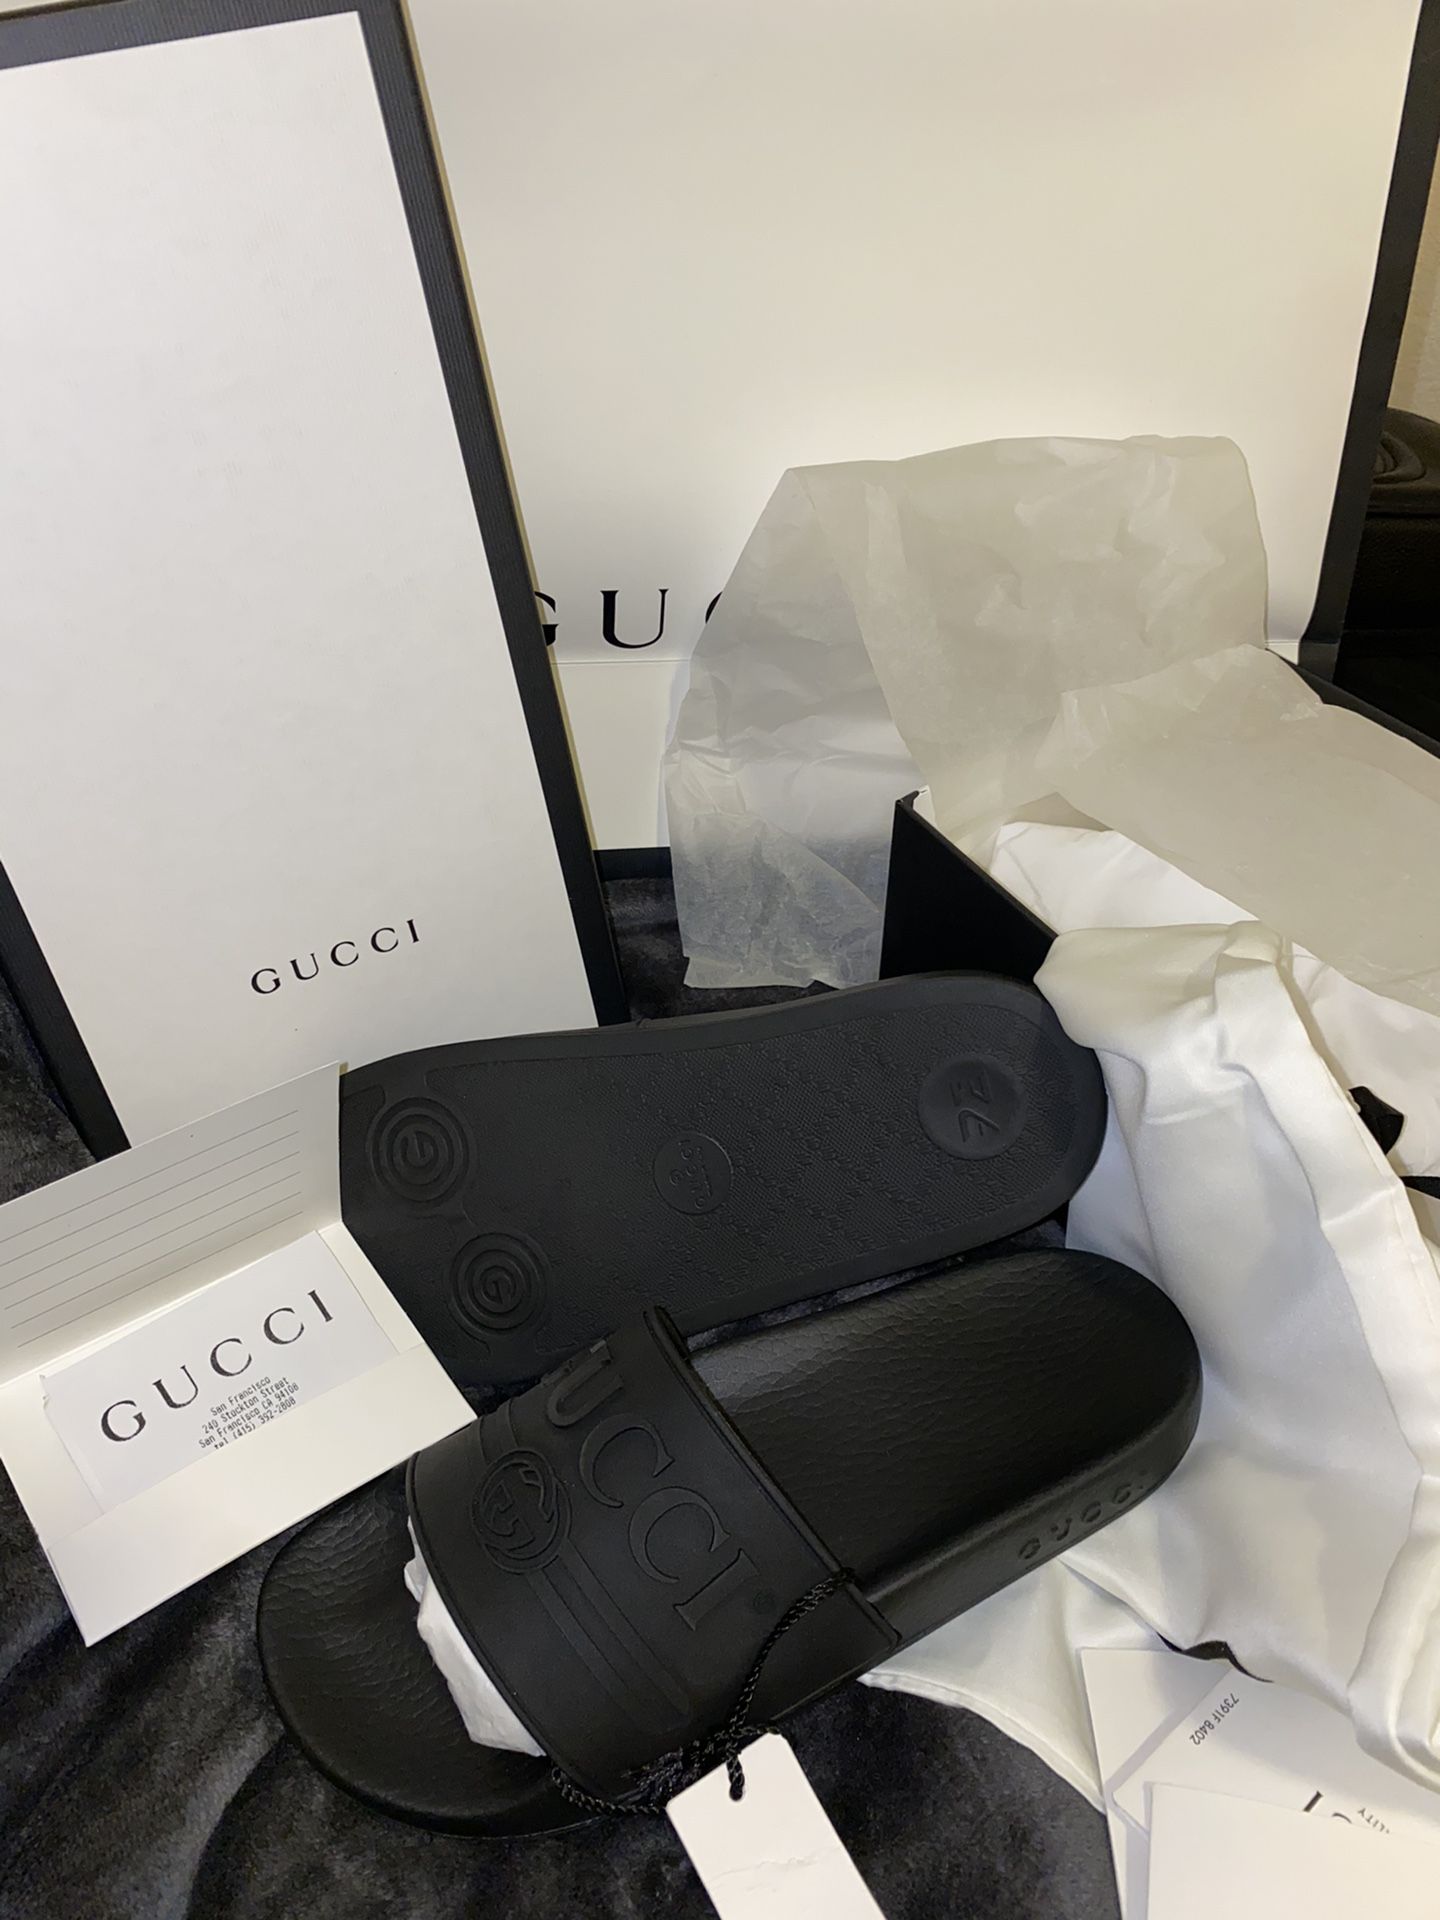 Gucci Slides - Women’s Size 7